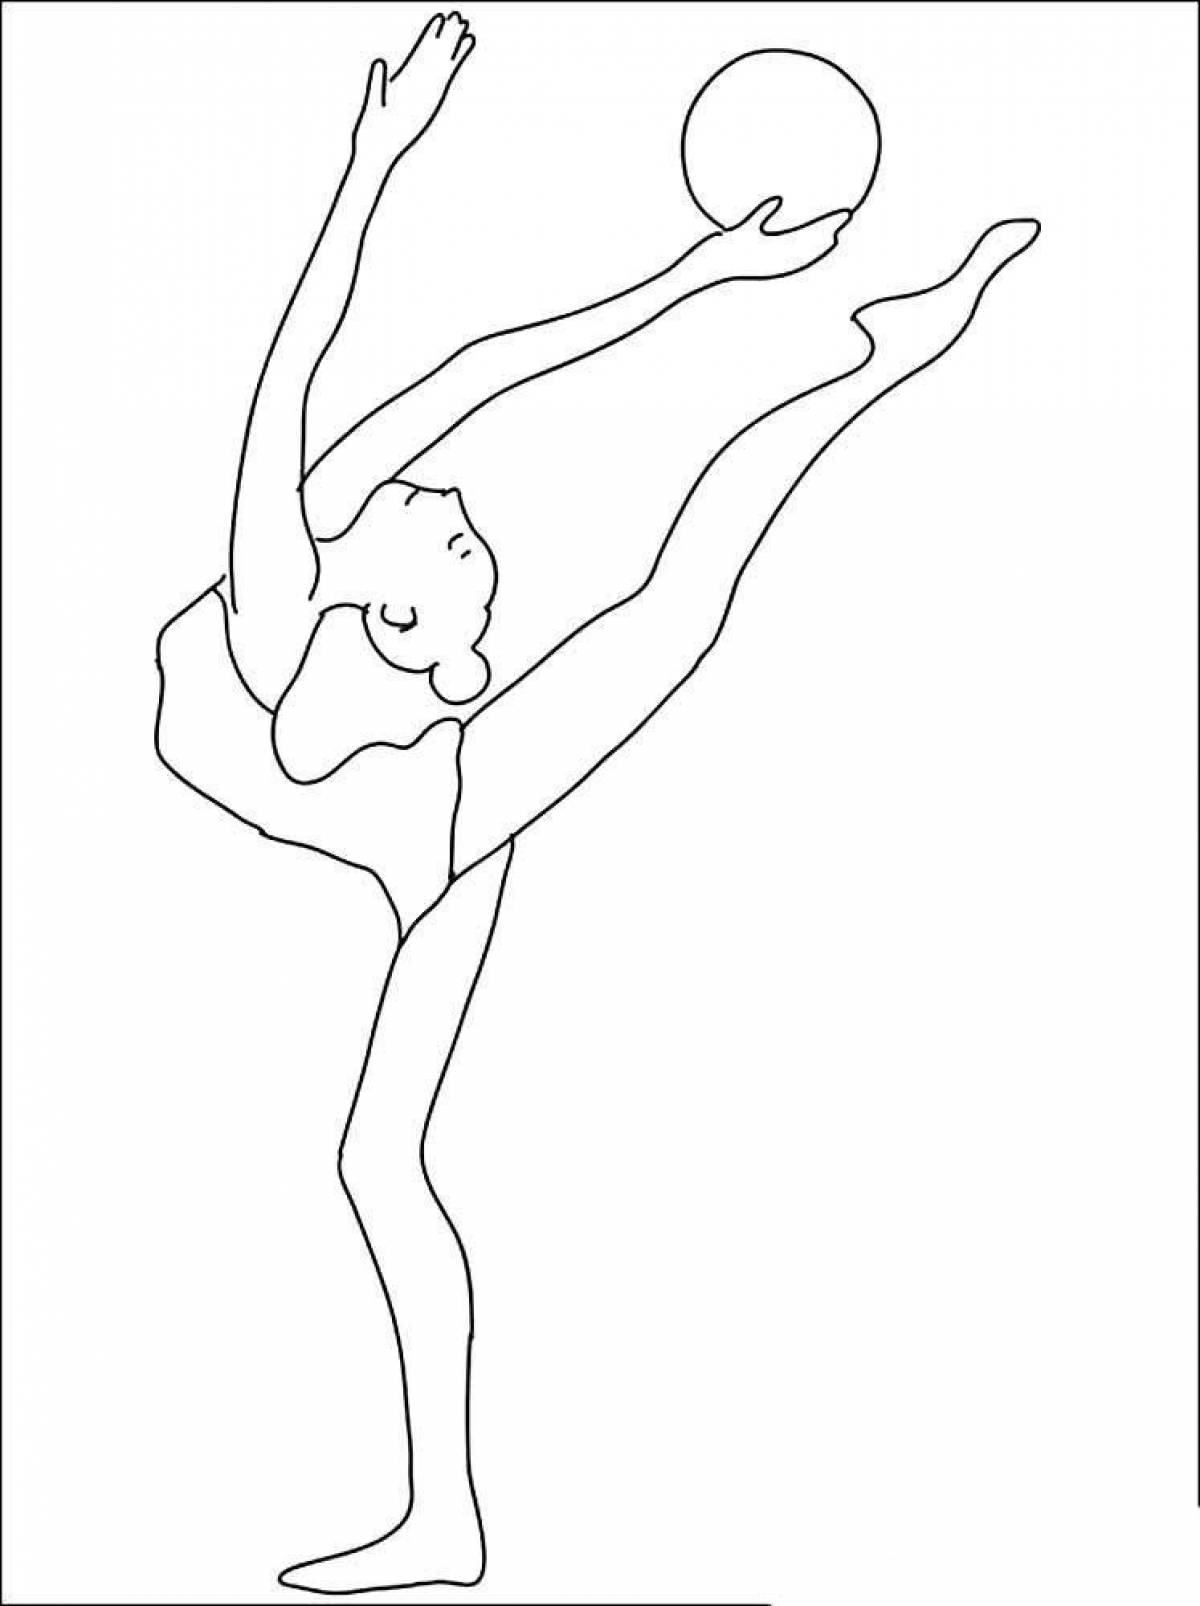 Exquisite gymnastics coloring book